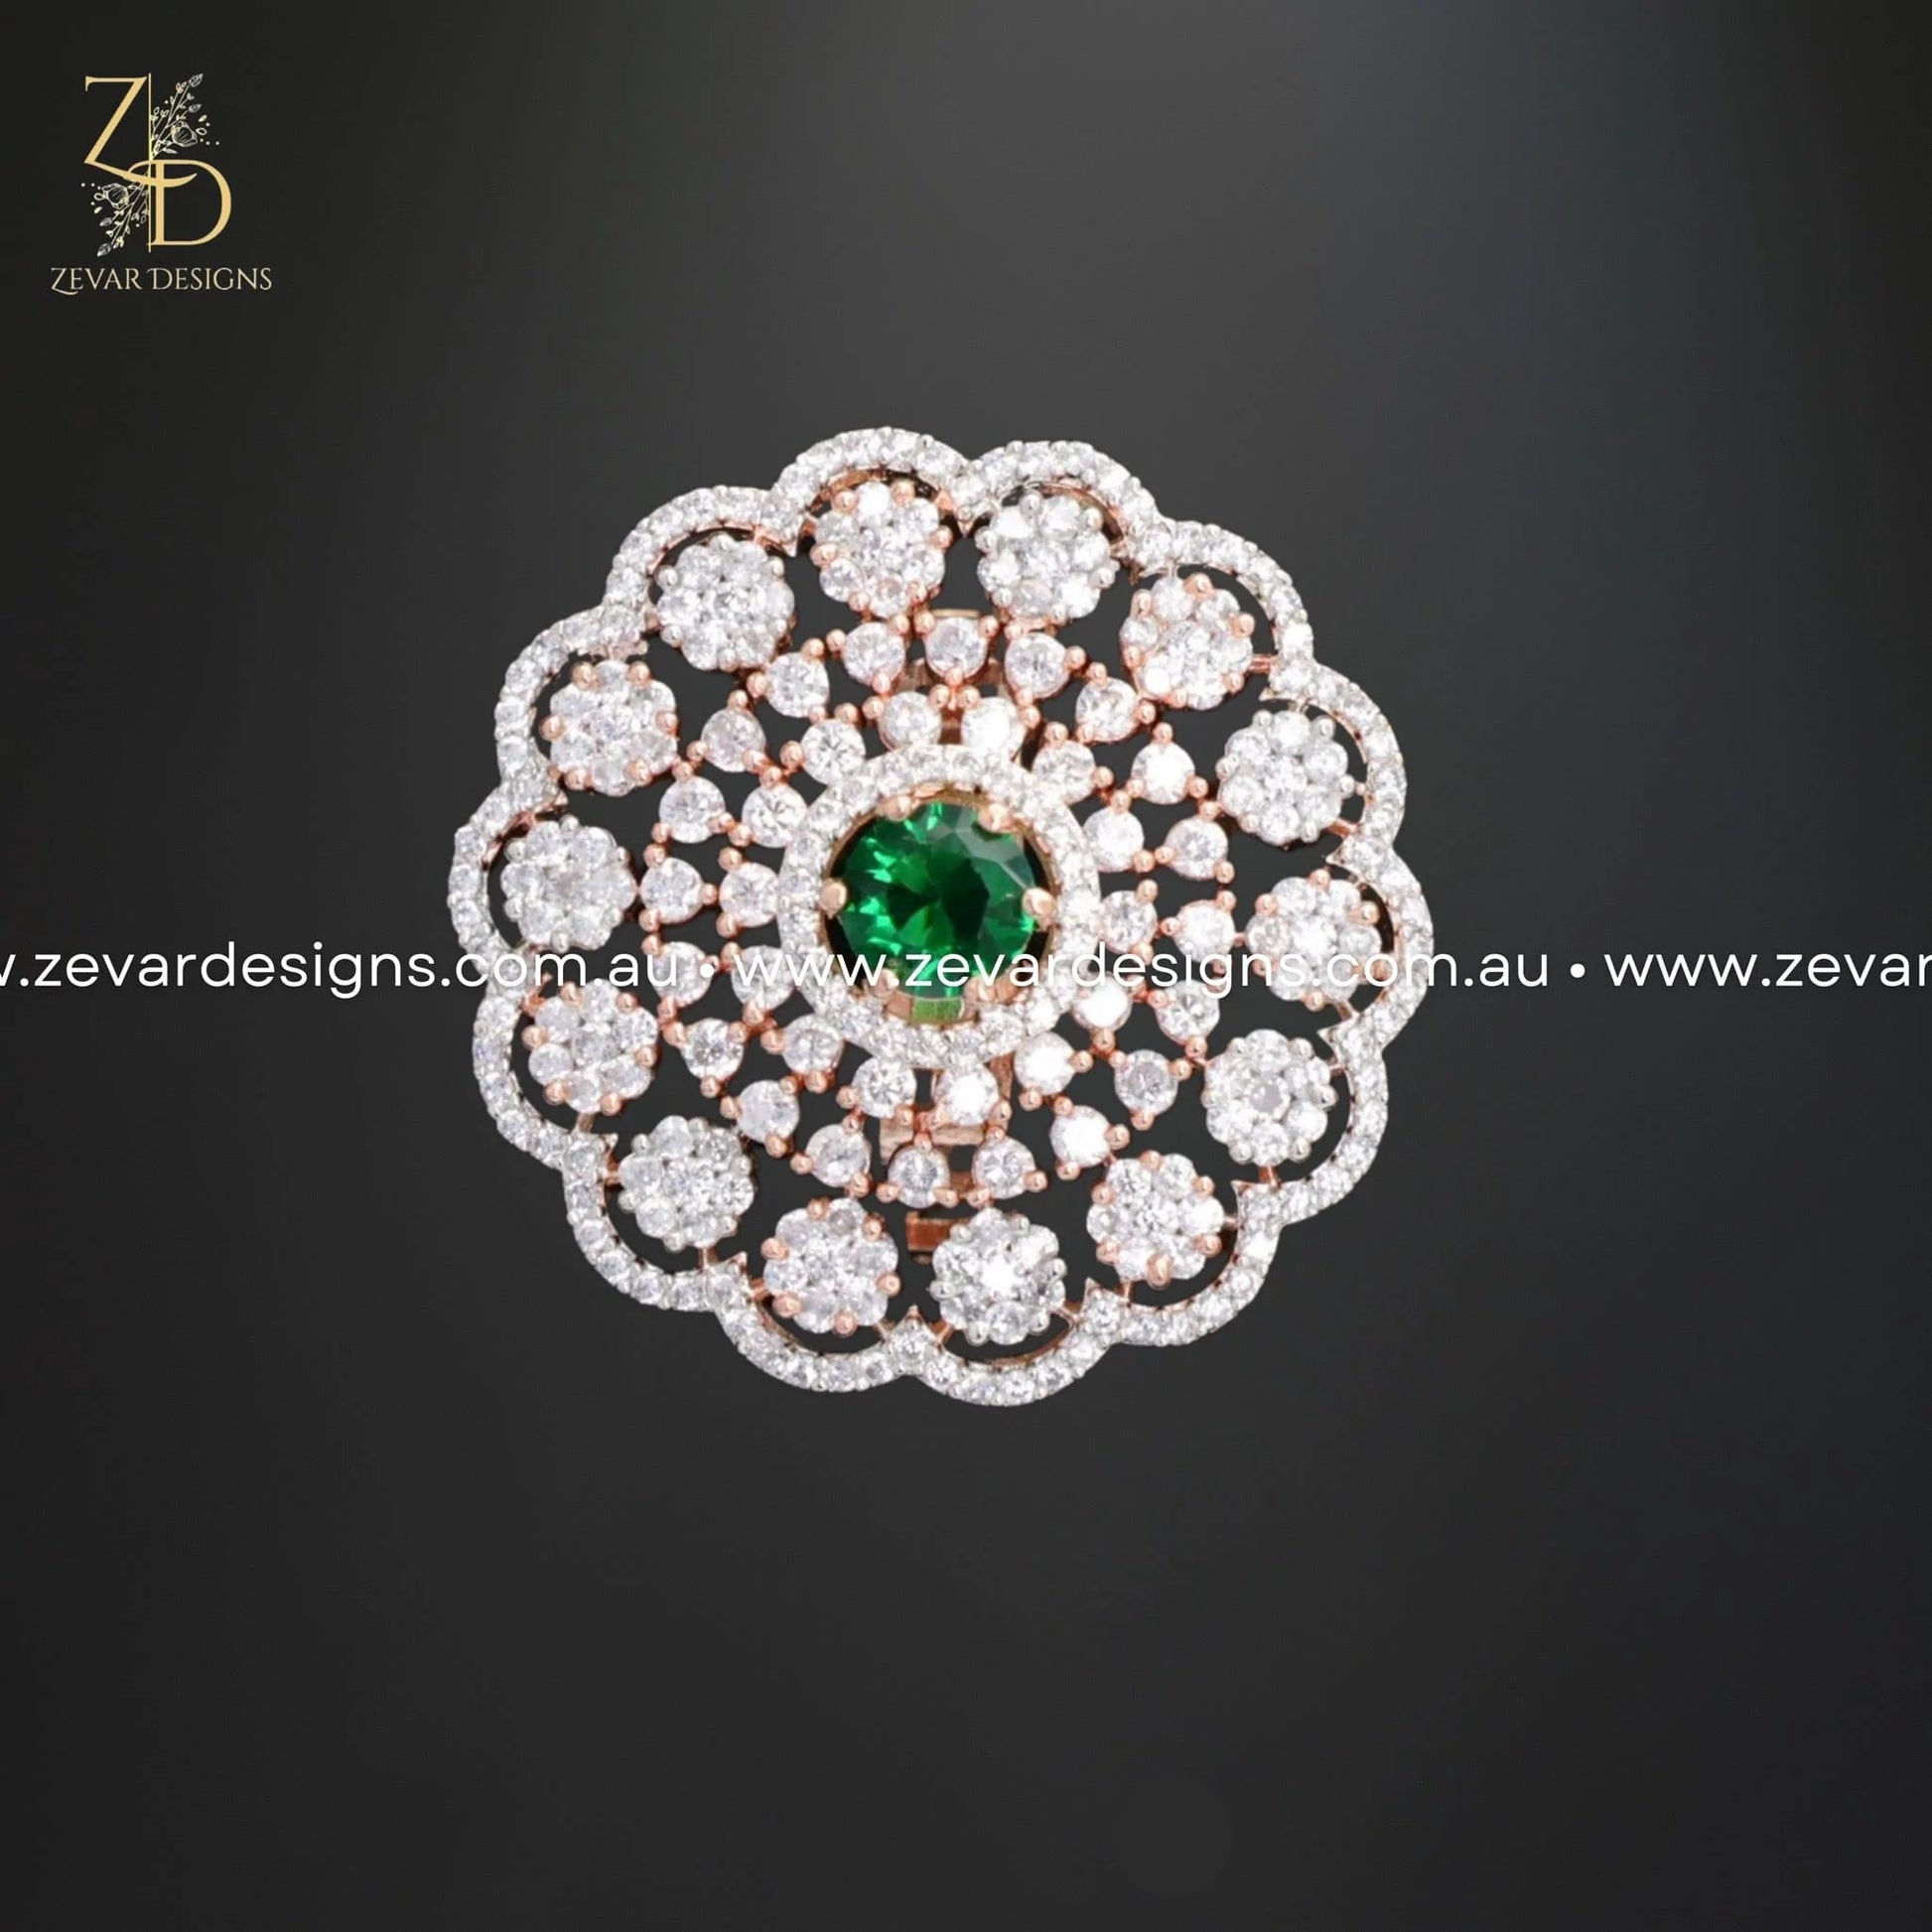 Zevar Designs Rings - AD AD/Zircon Ring in Rose Gold - Green